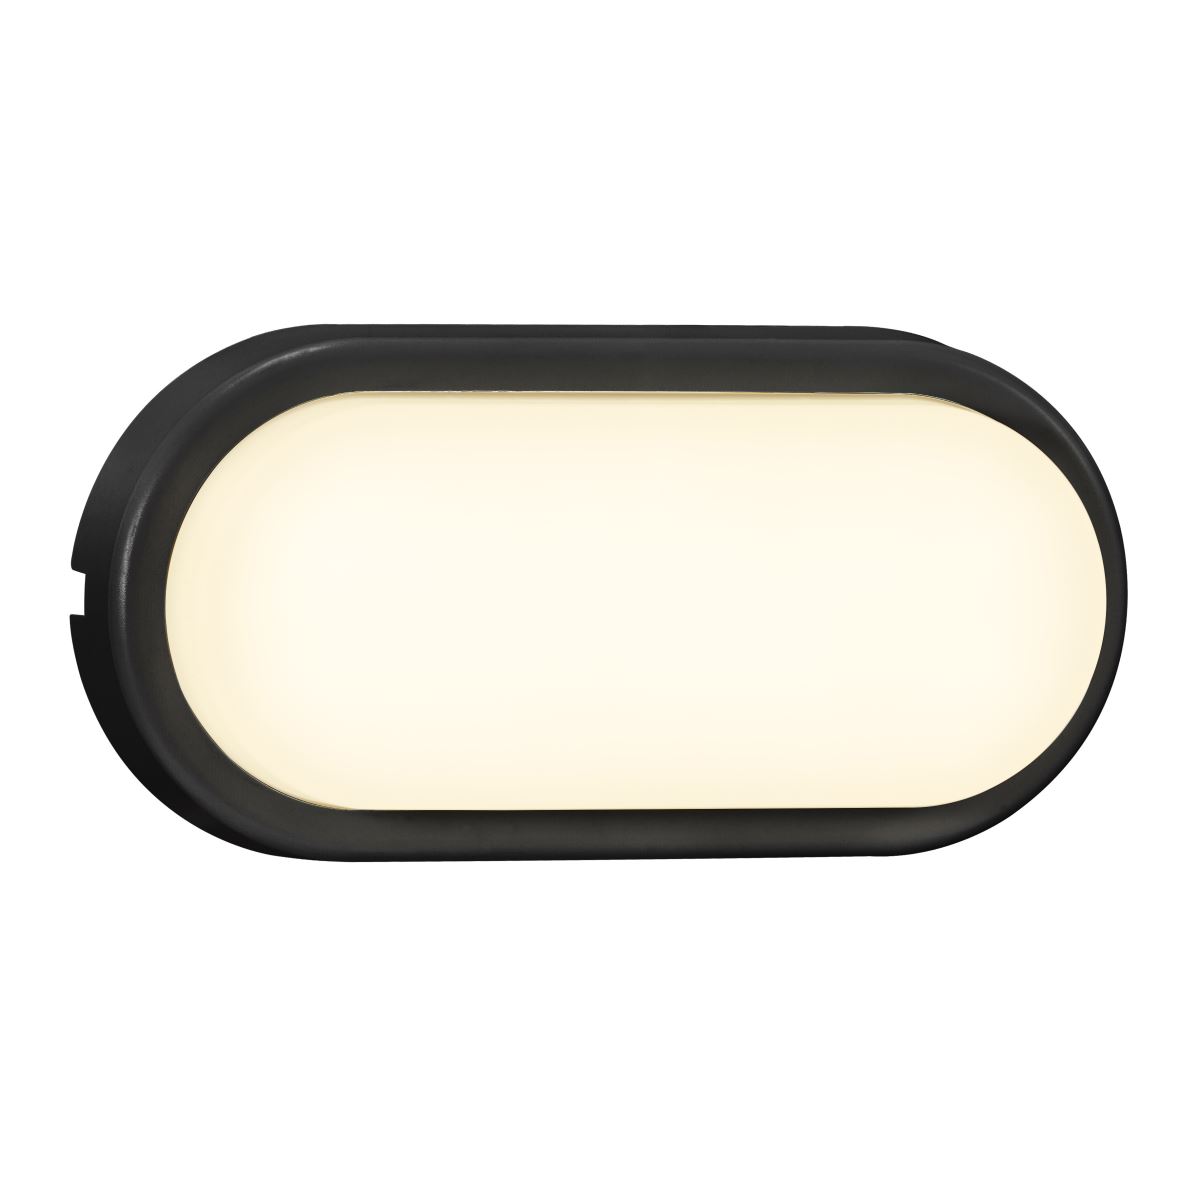 Nordlux CUBA OUT LED Außenwandleuchte schwarz, opal weiß 1600lm IP54 10x4,3x20,5cm von Nordlux